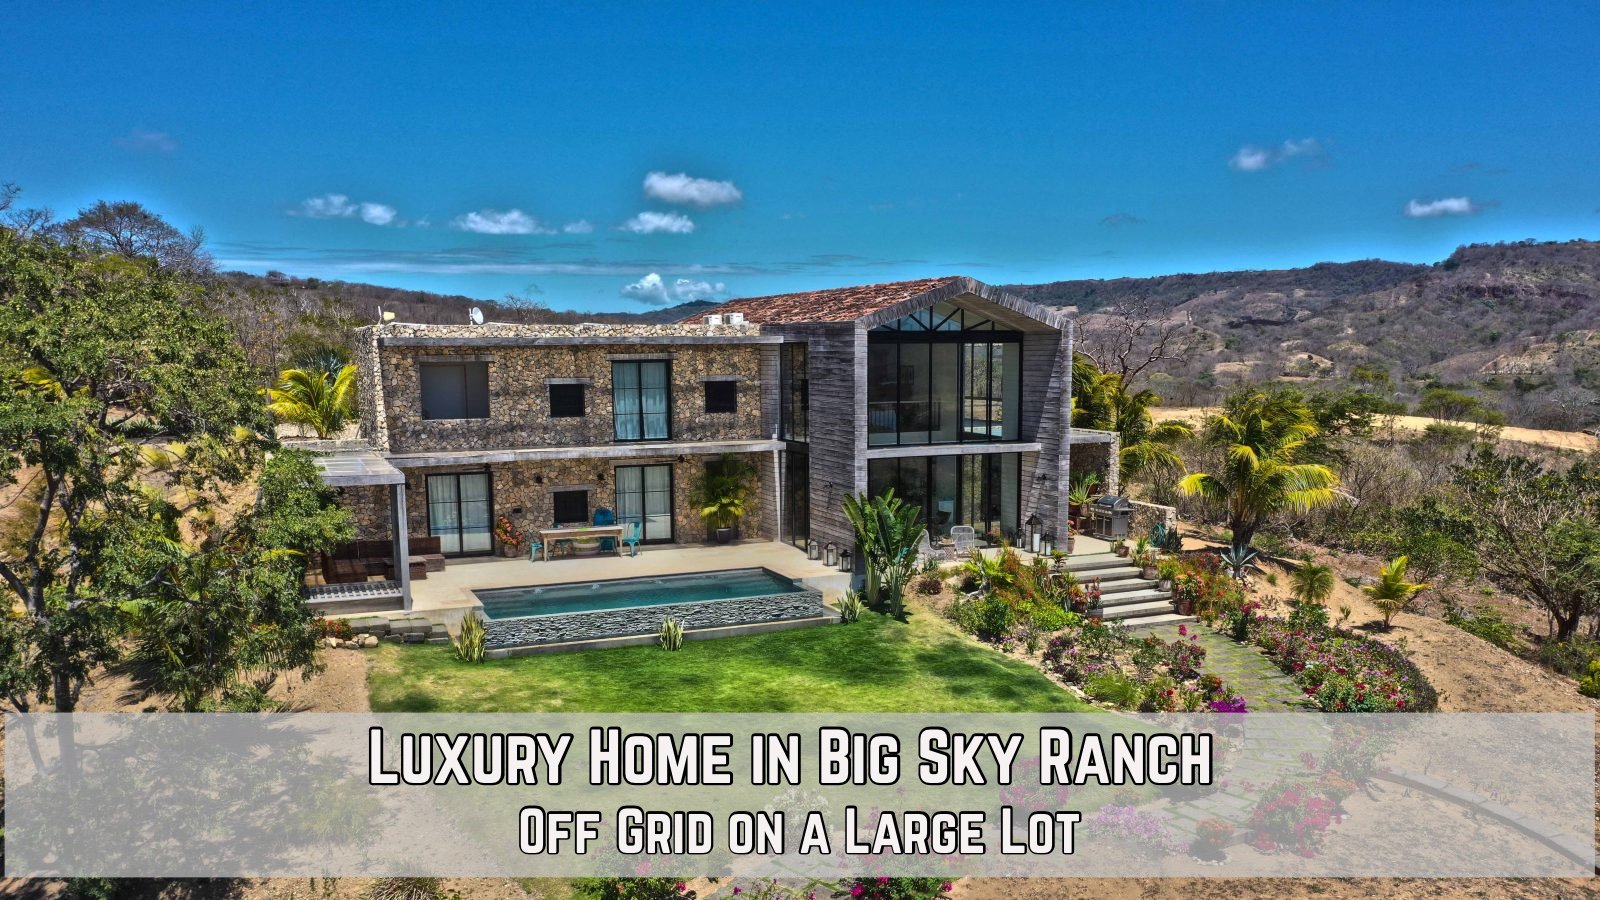 Real Estate for sale Little Big Sky Ranch Sur San Juan Del Sur Nicaragua 11.jpg